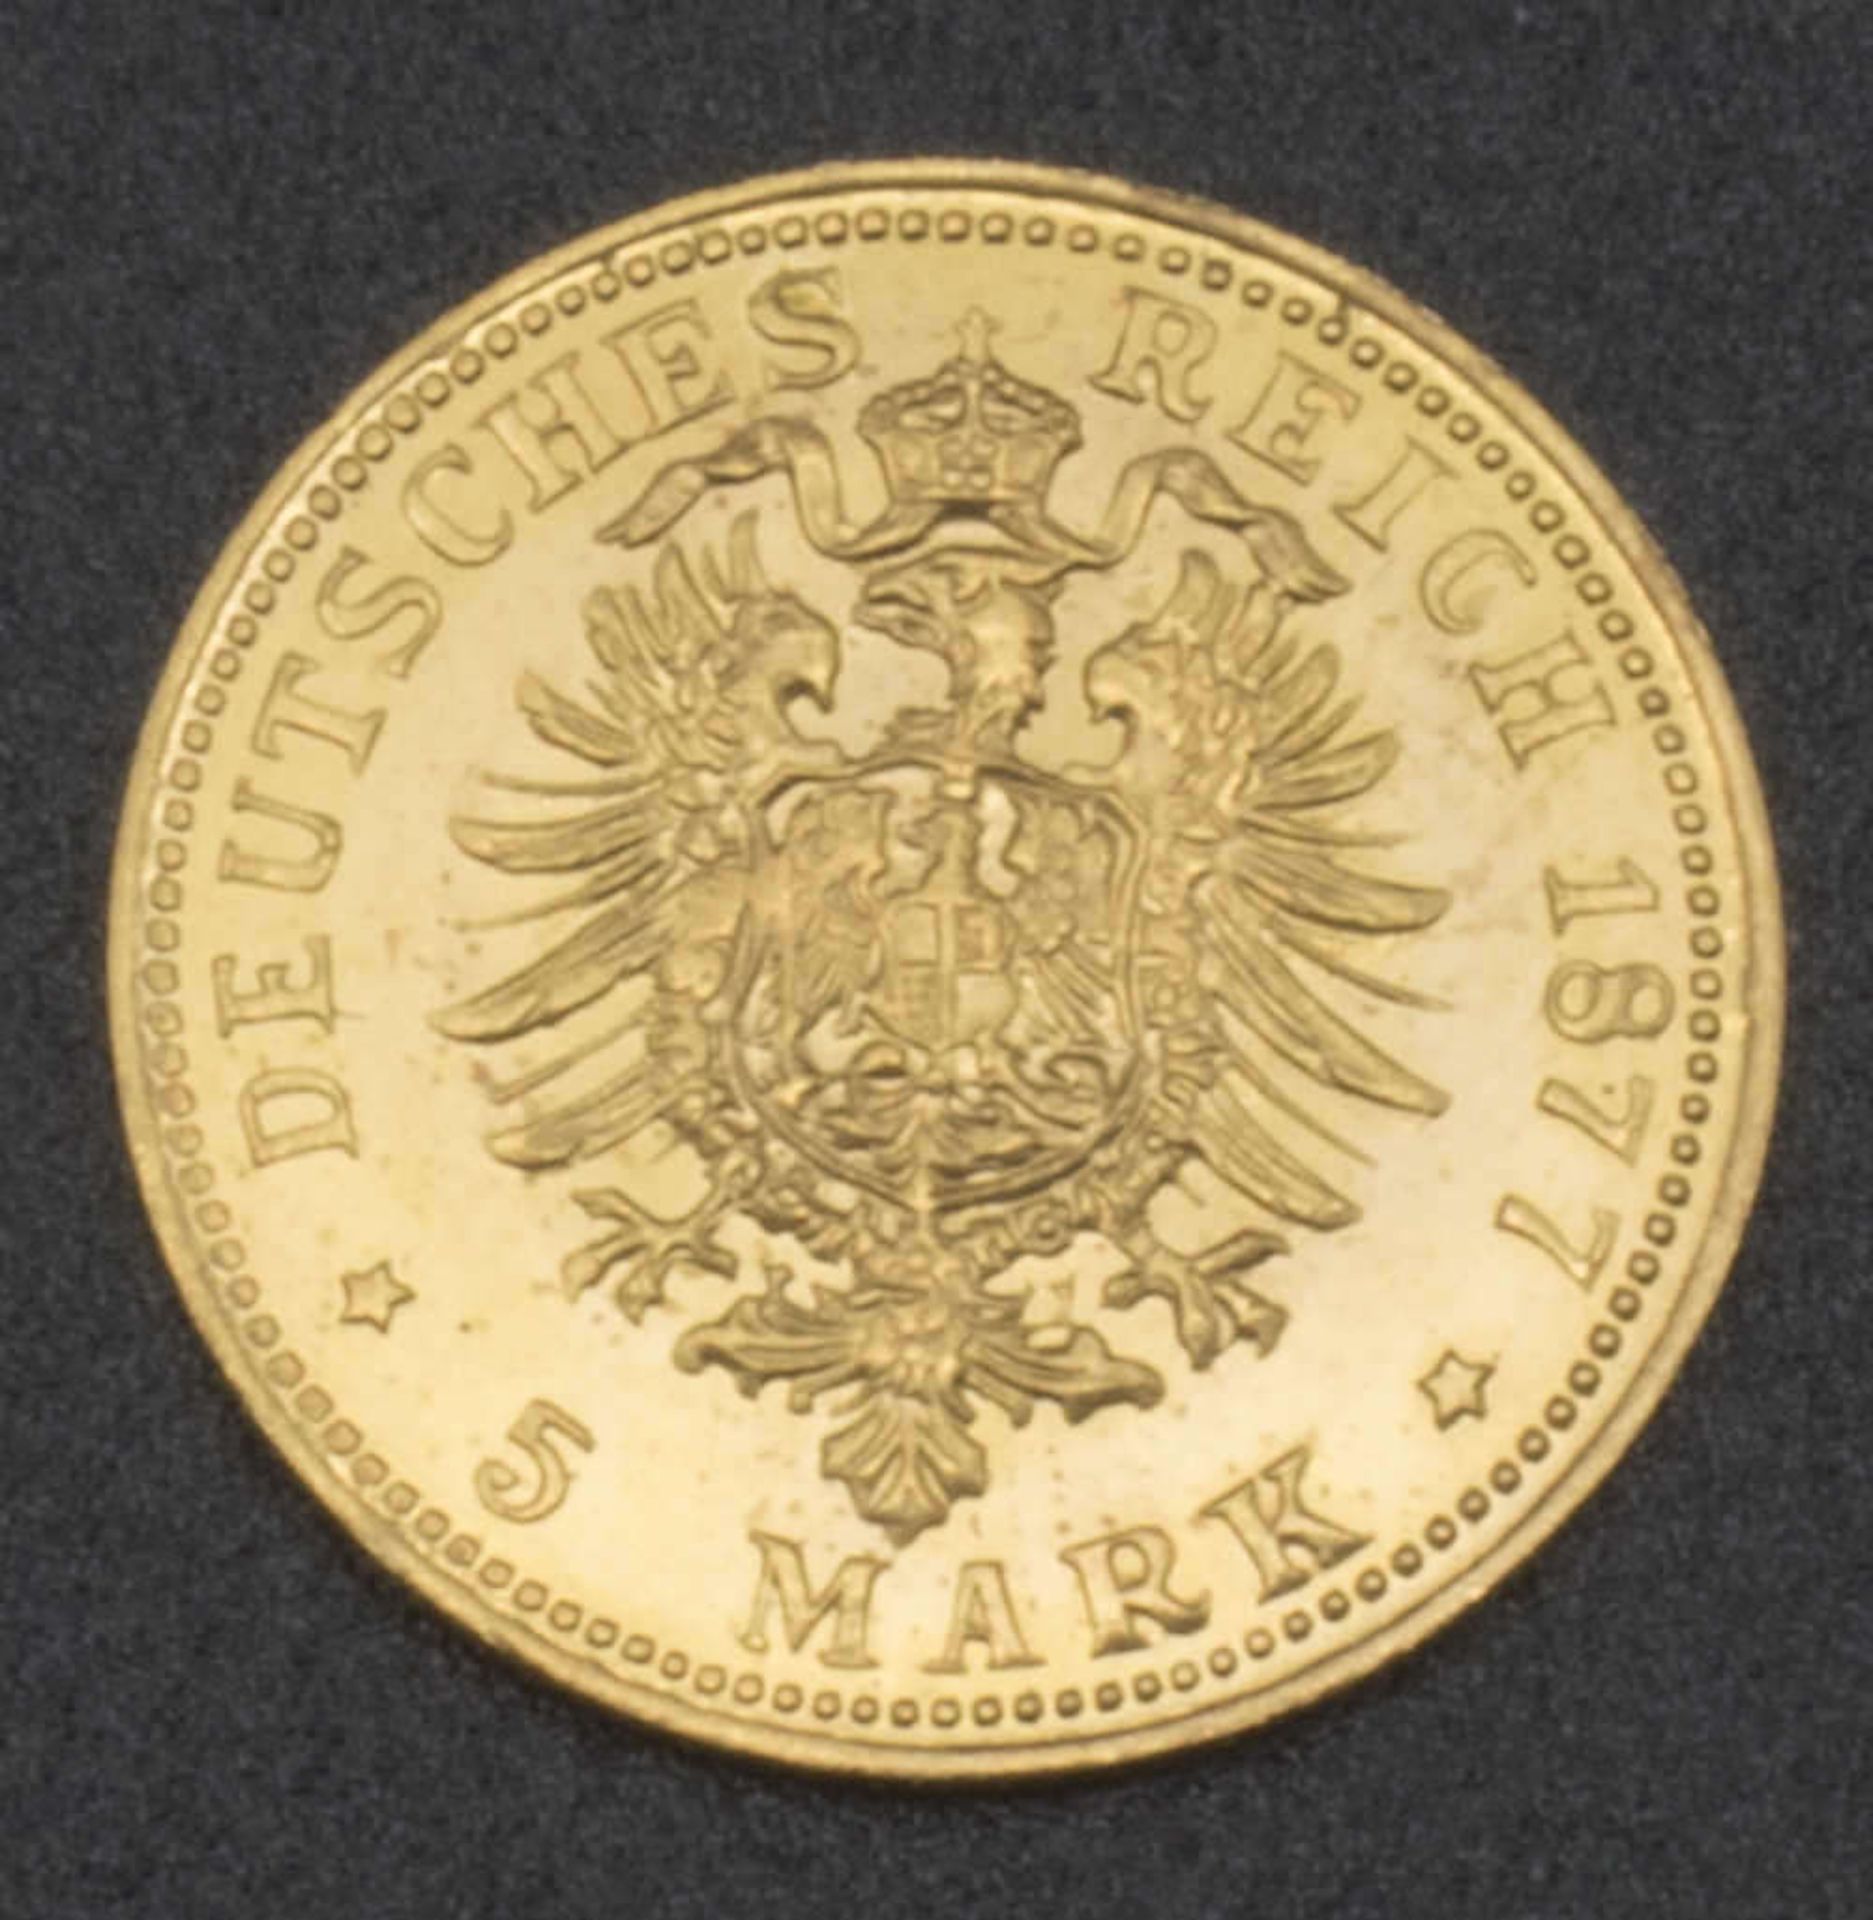 Kaiserreich Bayern, Goldmünze 5 Mark 1877 D, Ludwig II. 1864-1886. Feines Exemplar, Erhaltung: - Image 2 of 2